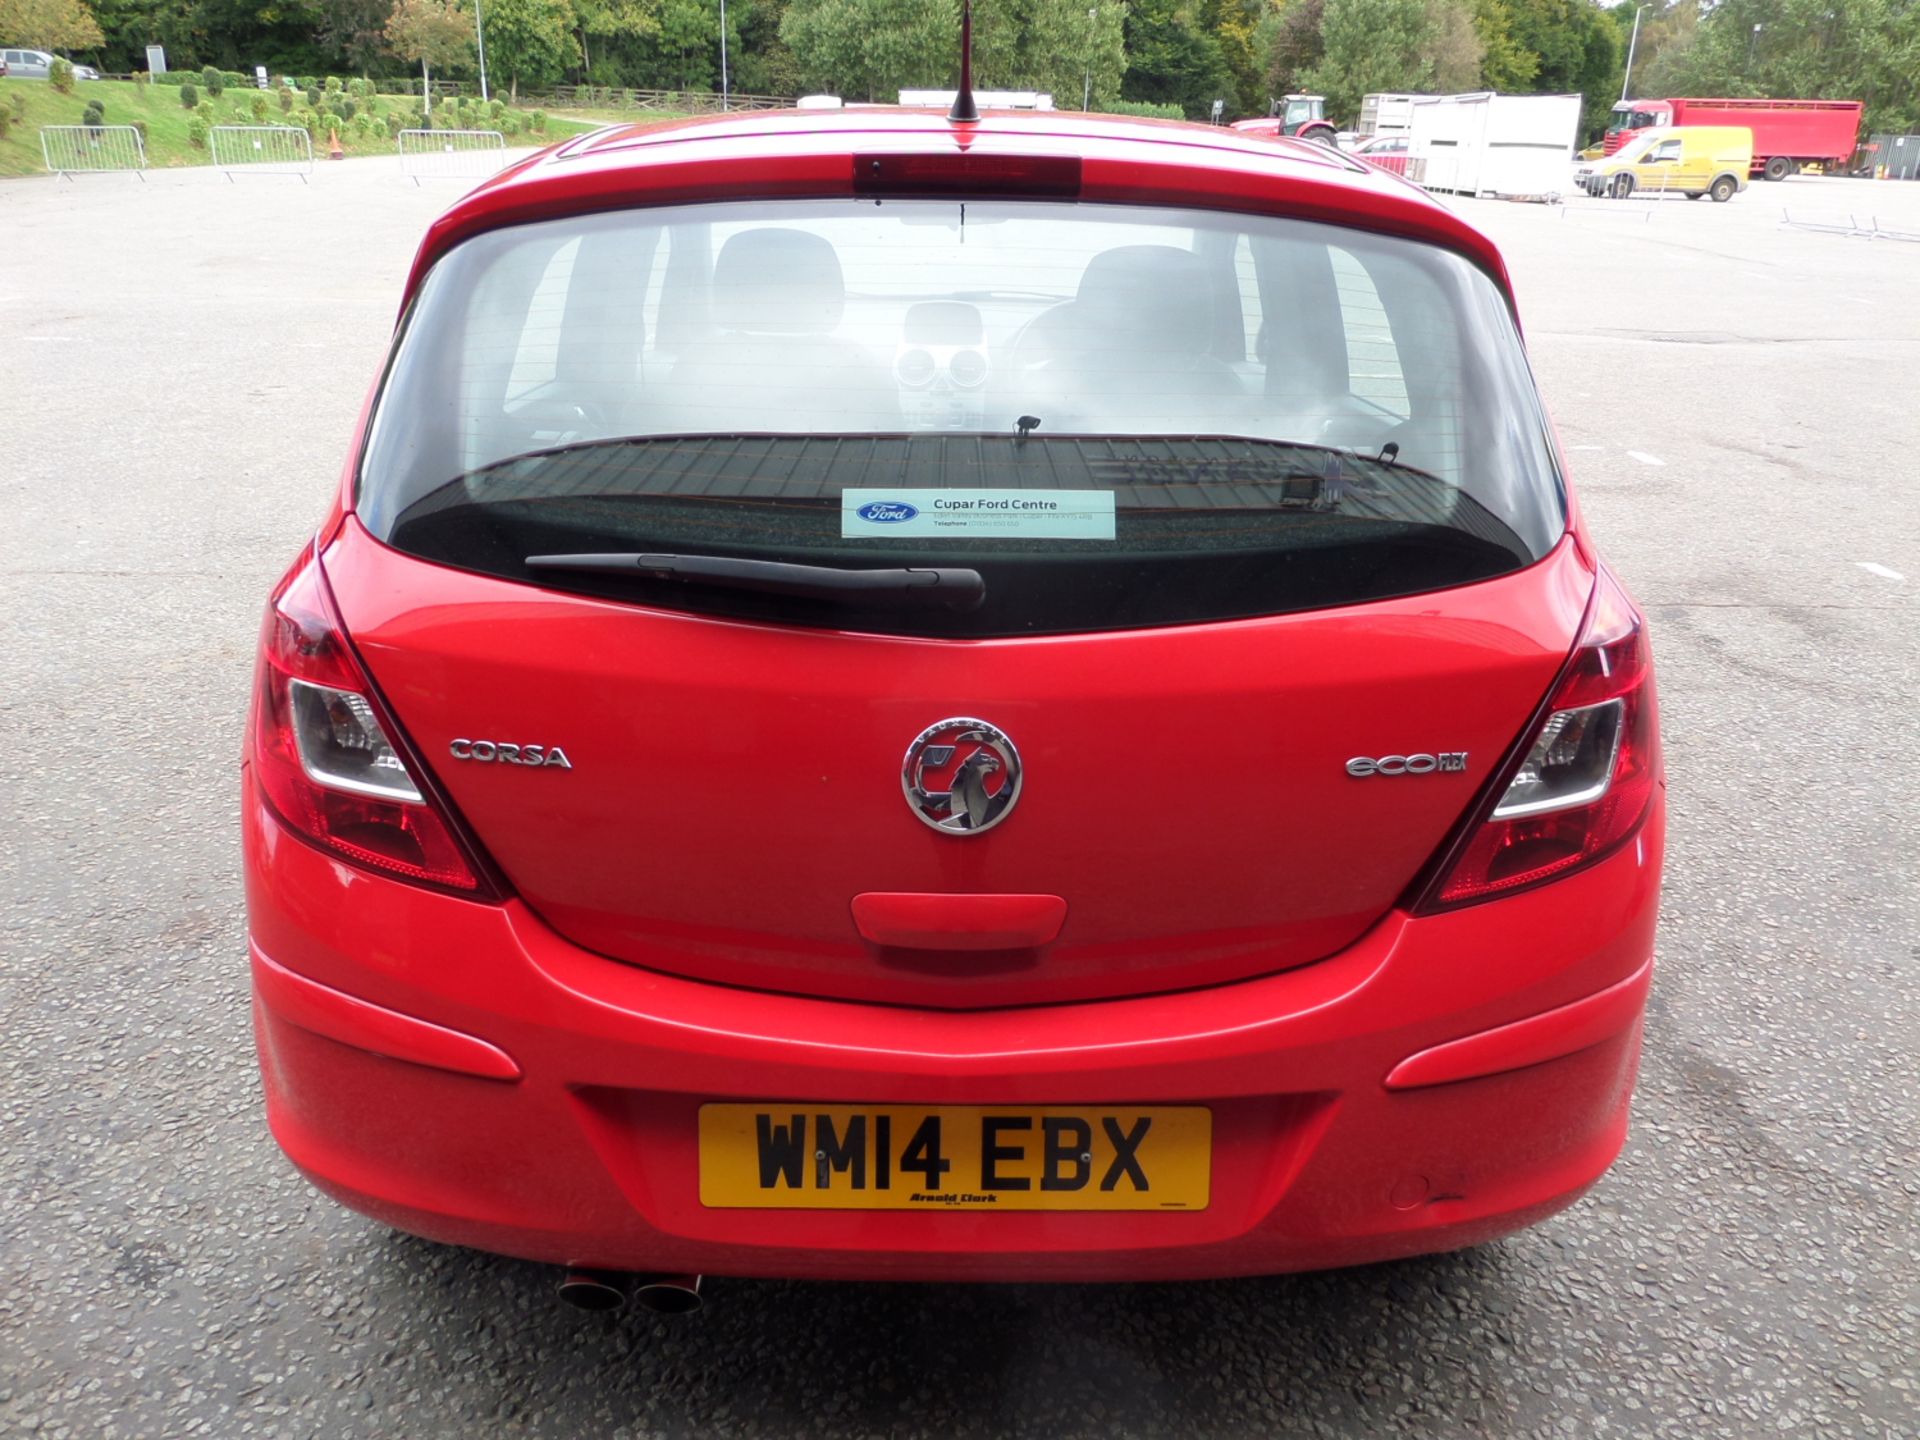 Vauxhall Corsa Design Ac Cdti Ecof - 1248cc 5 Door - Image 4 of 7